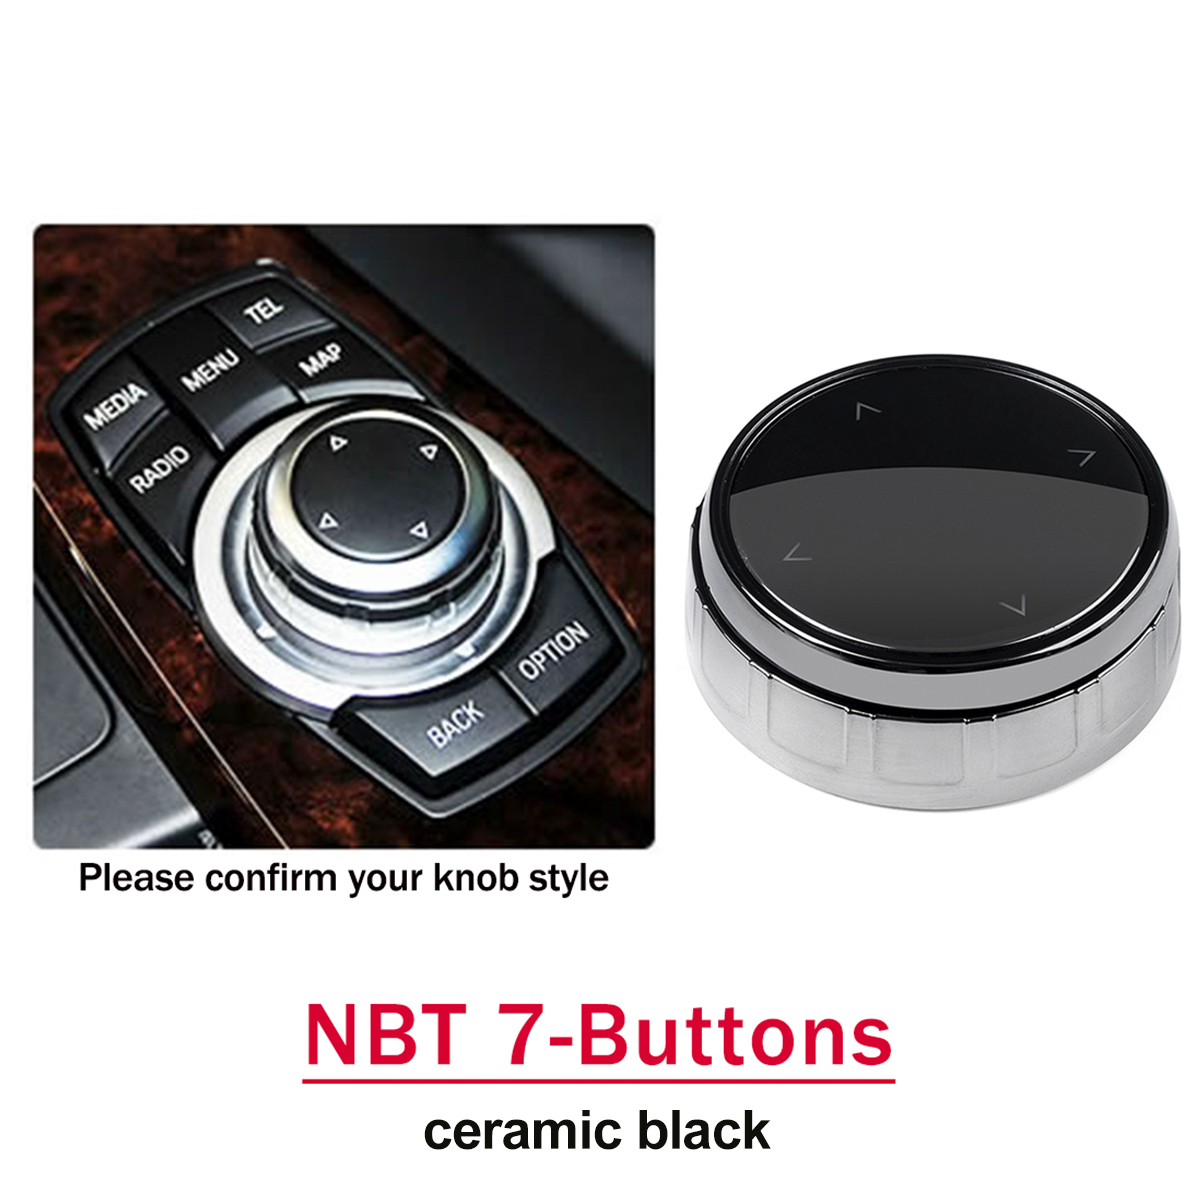 Car Multimedia Button Knob Cover for BMW NBT 7-Buttons